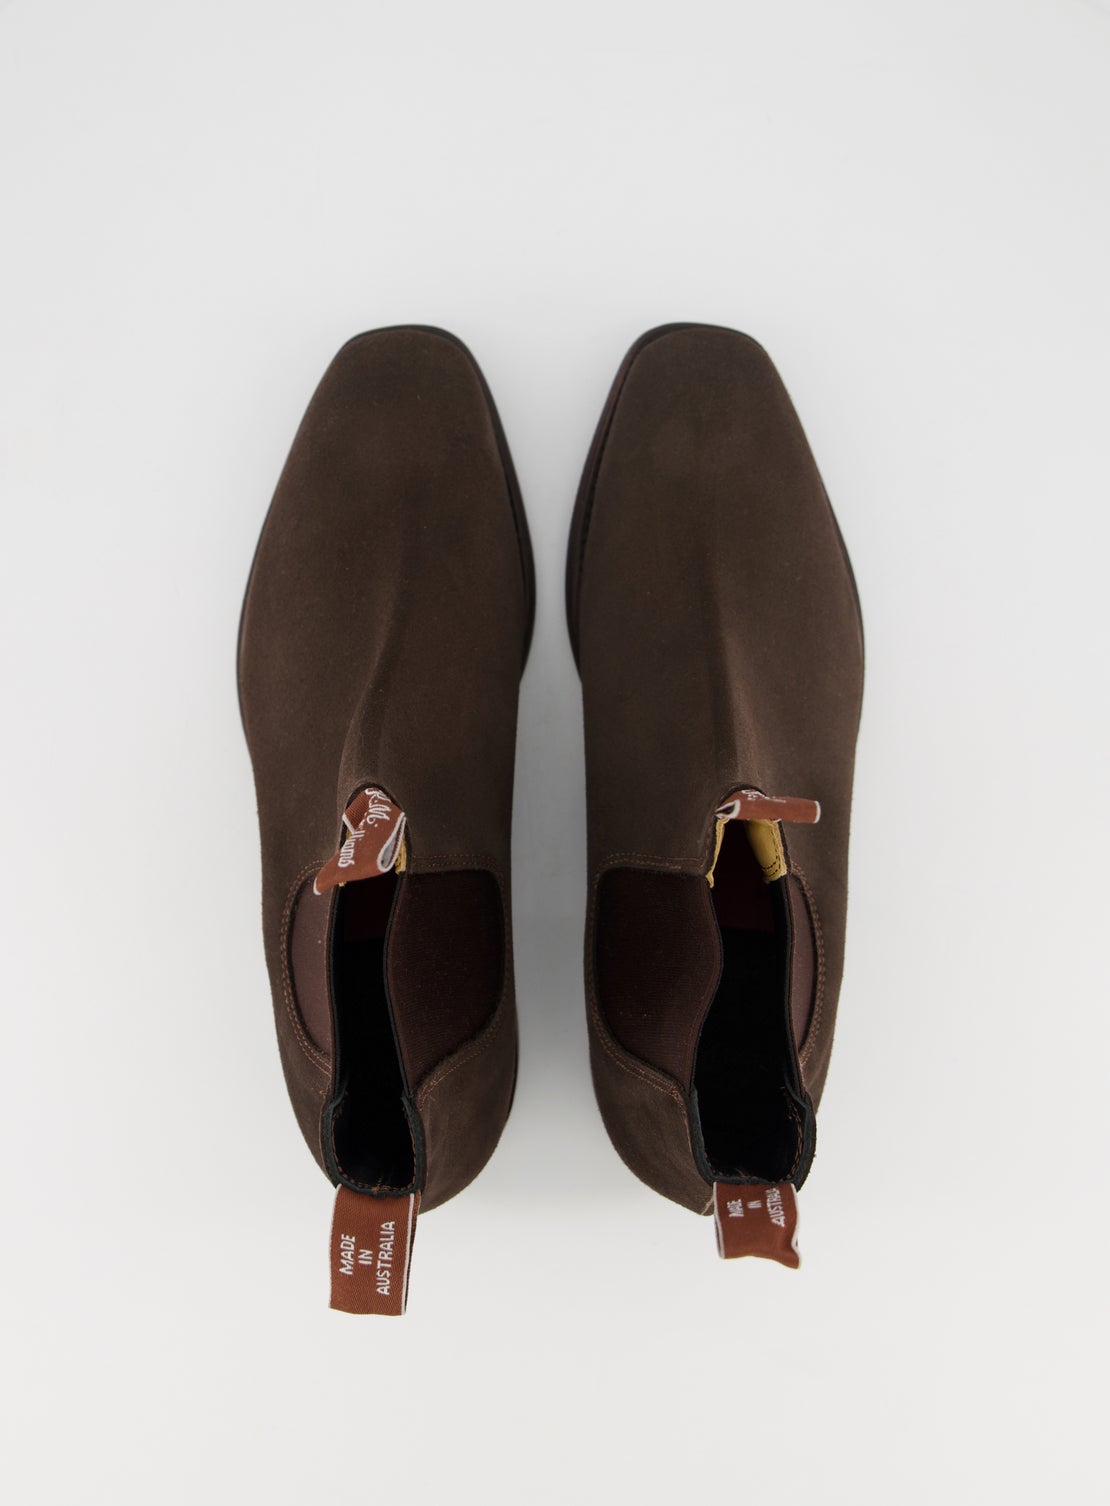 RM Williams Comfort Craftsman Boot - Chocolate Suede